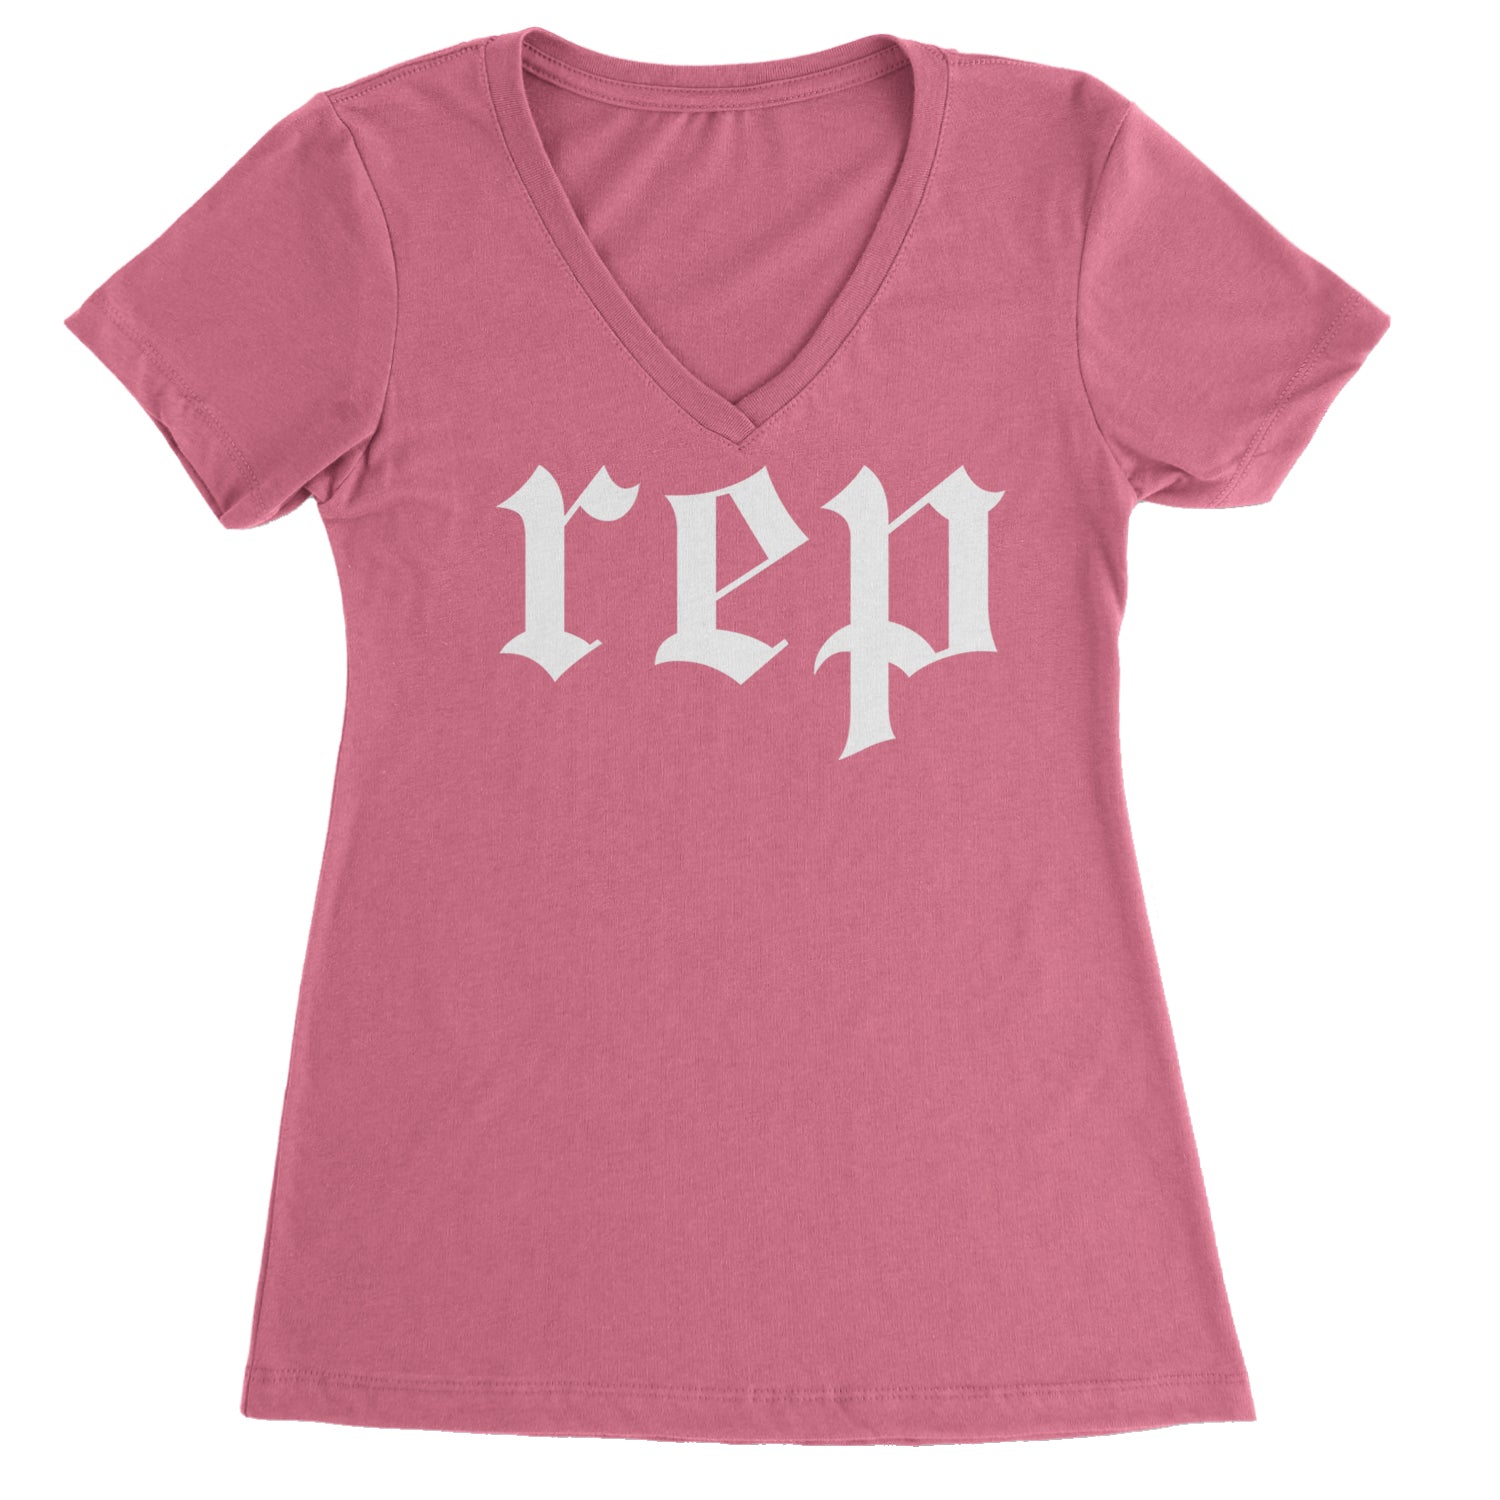 REP Reputation Eras Music Lover Gift Fan Favorite Ladies V-Neck T-shirt Hot Pink